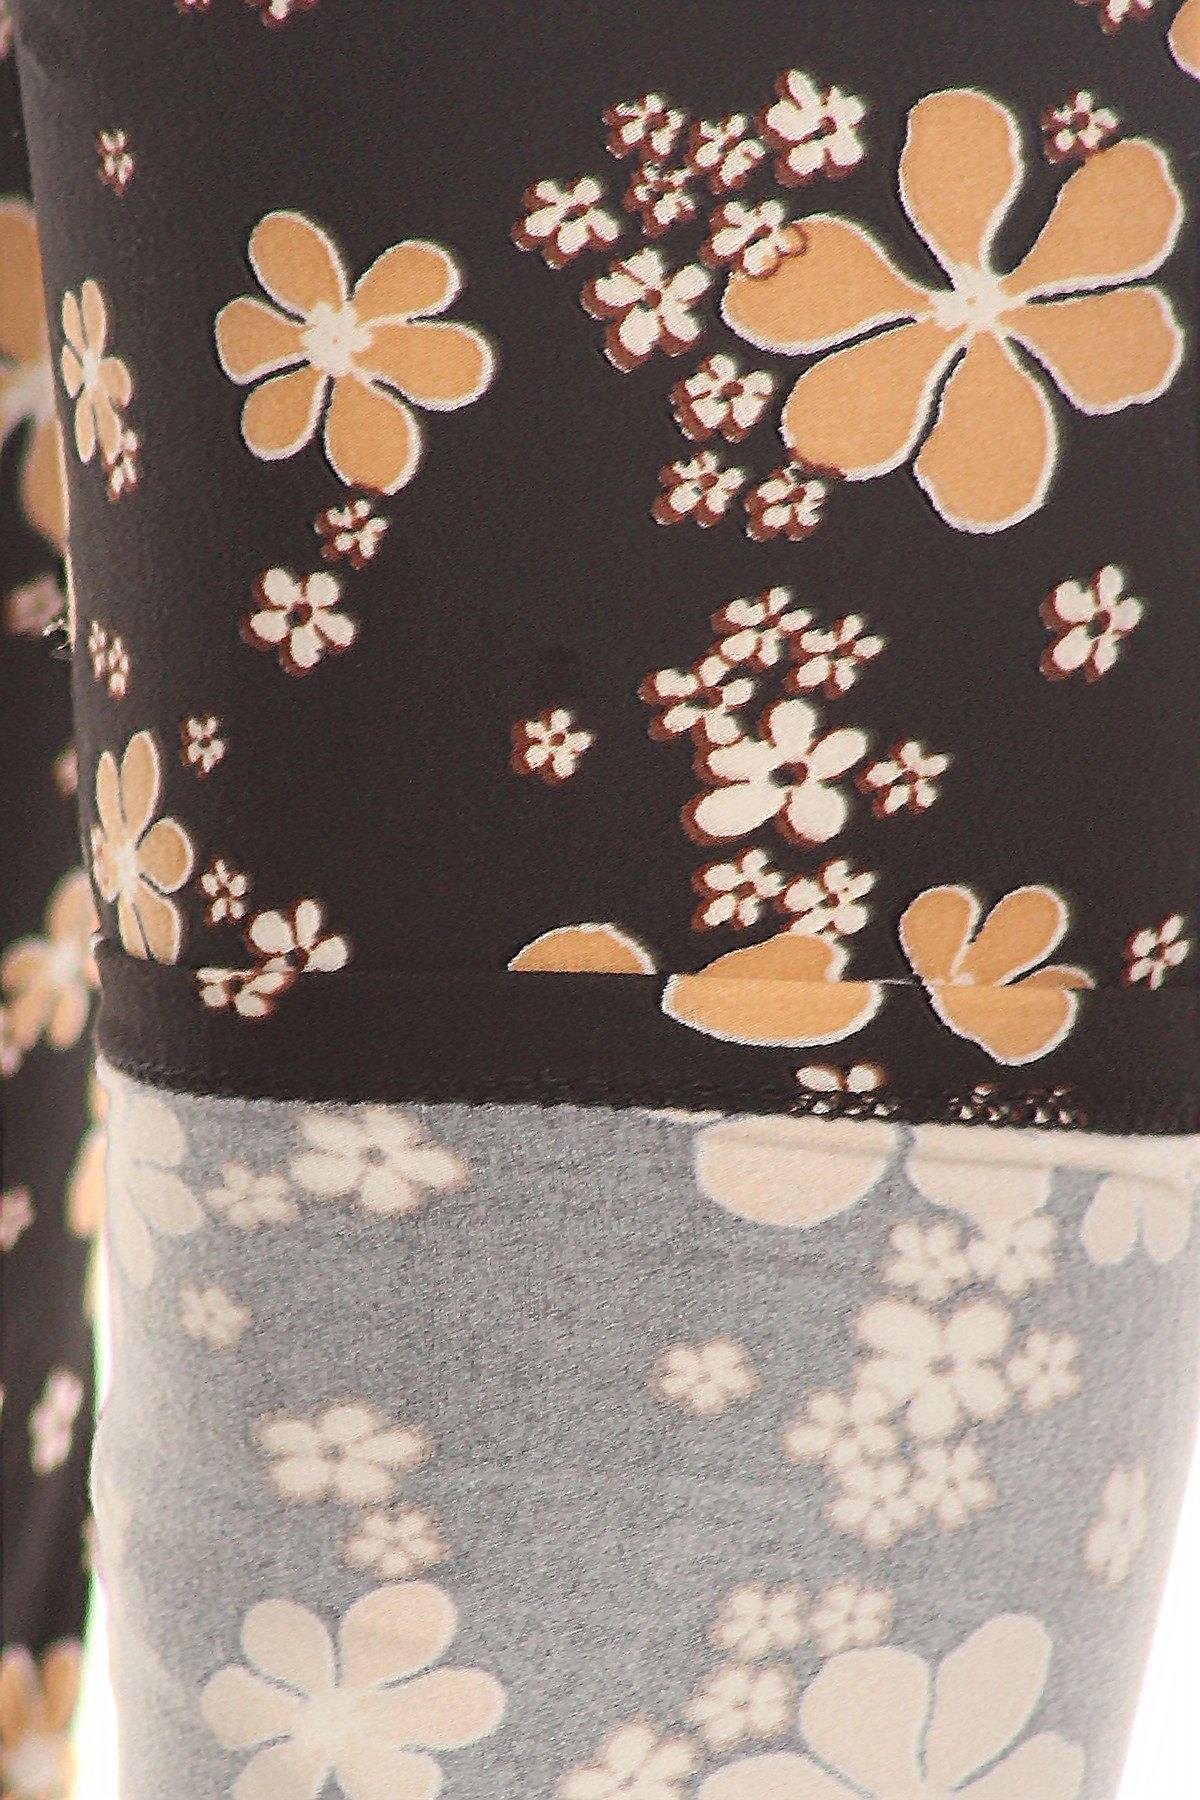 Super Soft Peach Skin Fabric, Floral Graphic Printed Knit Legging With Elastic Waist Detail. High Waist Fit - Pearlara